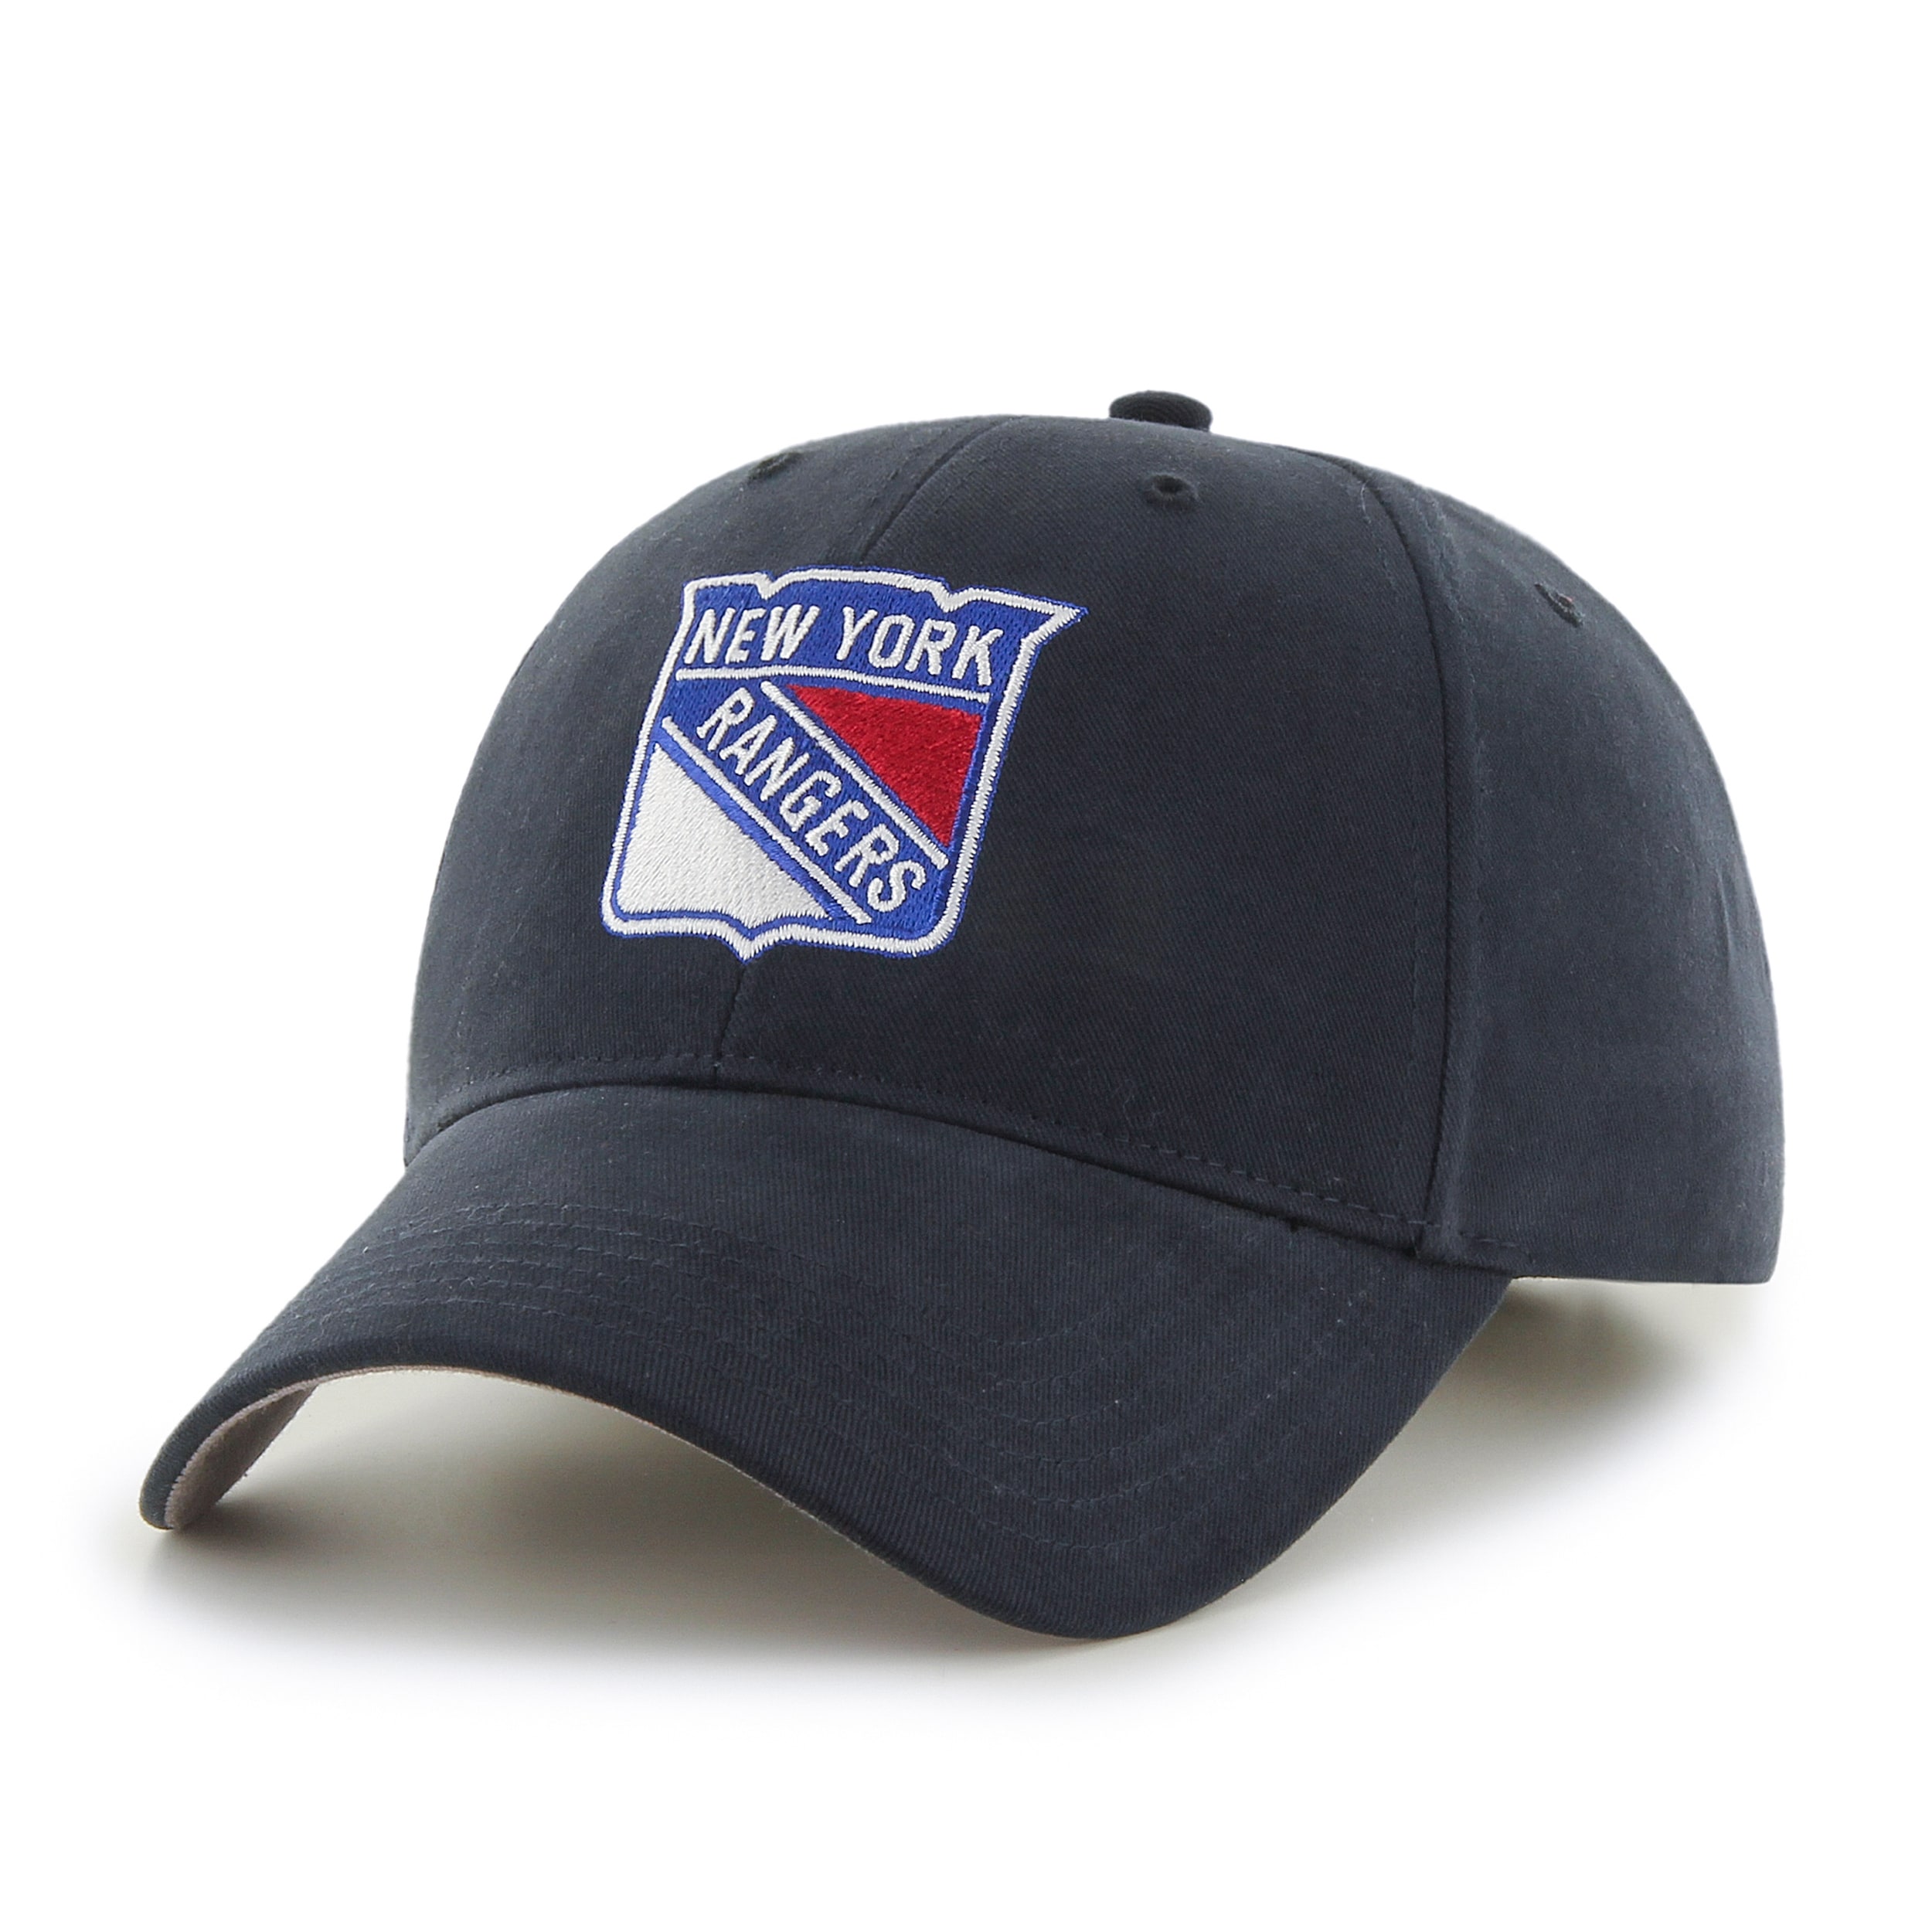 new york rangers hat